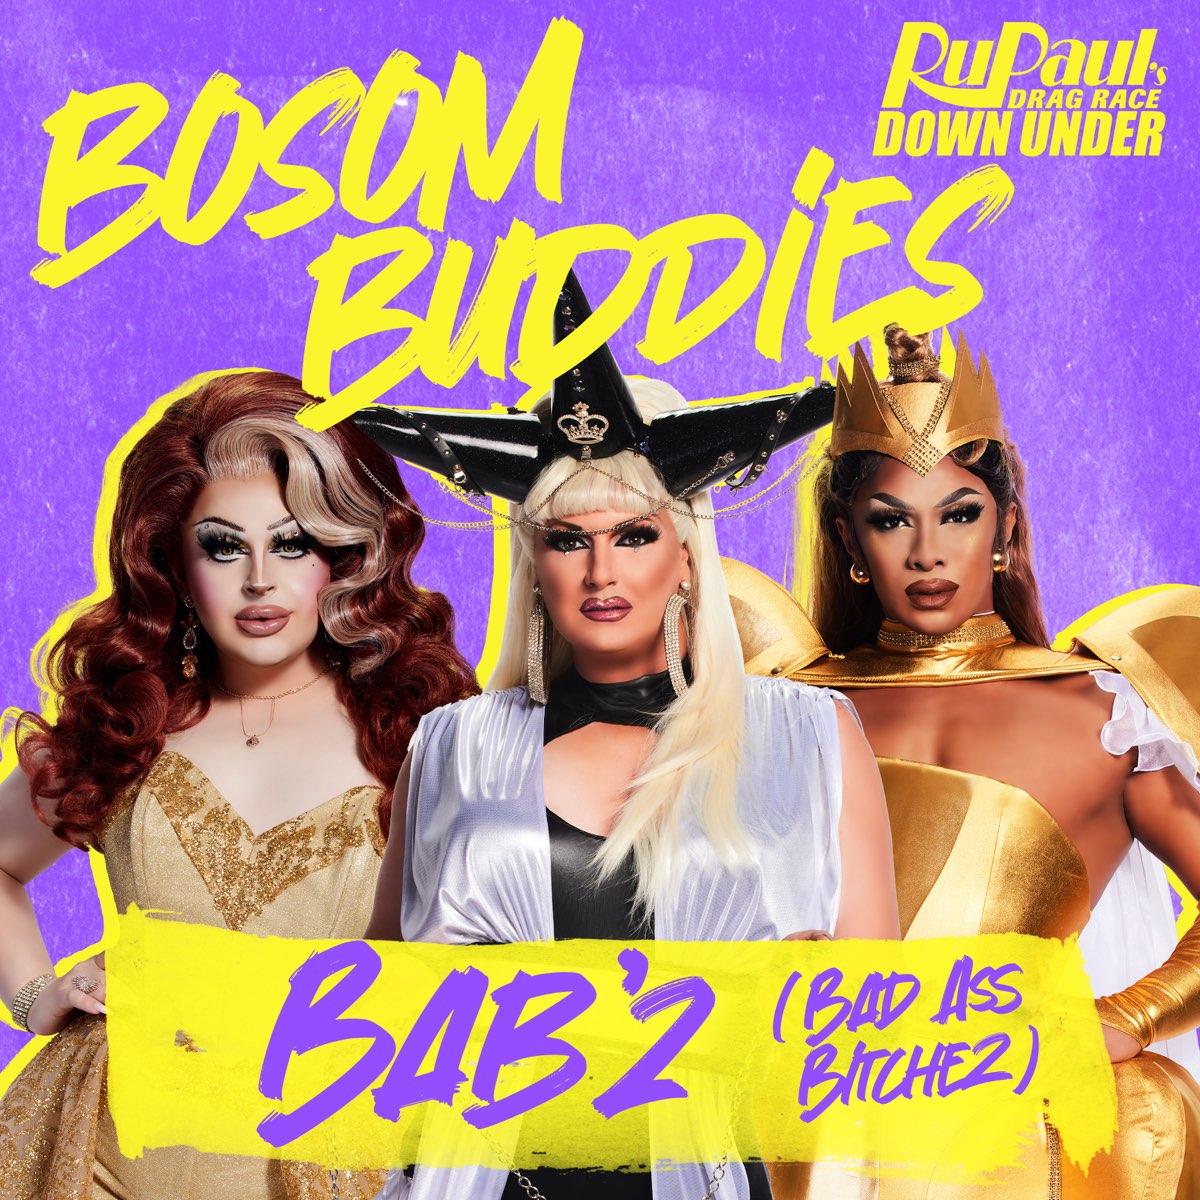 The Cast of RuPaul&#039;s Drag Race Down Under — Bosom Buddies - BAB&#039;Z Version cover artwork